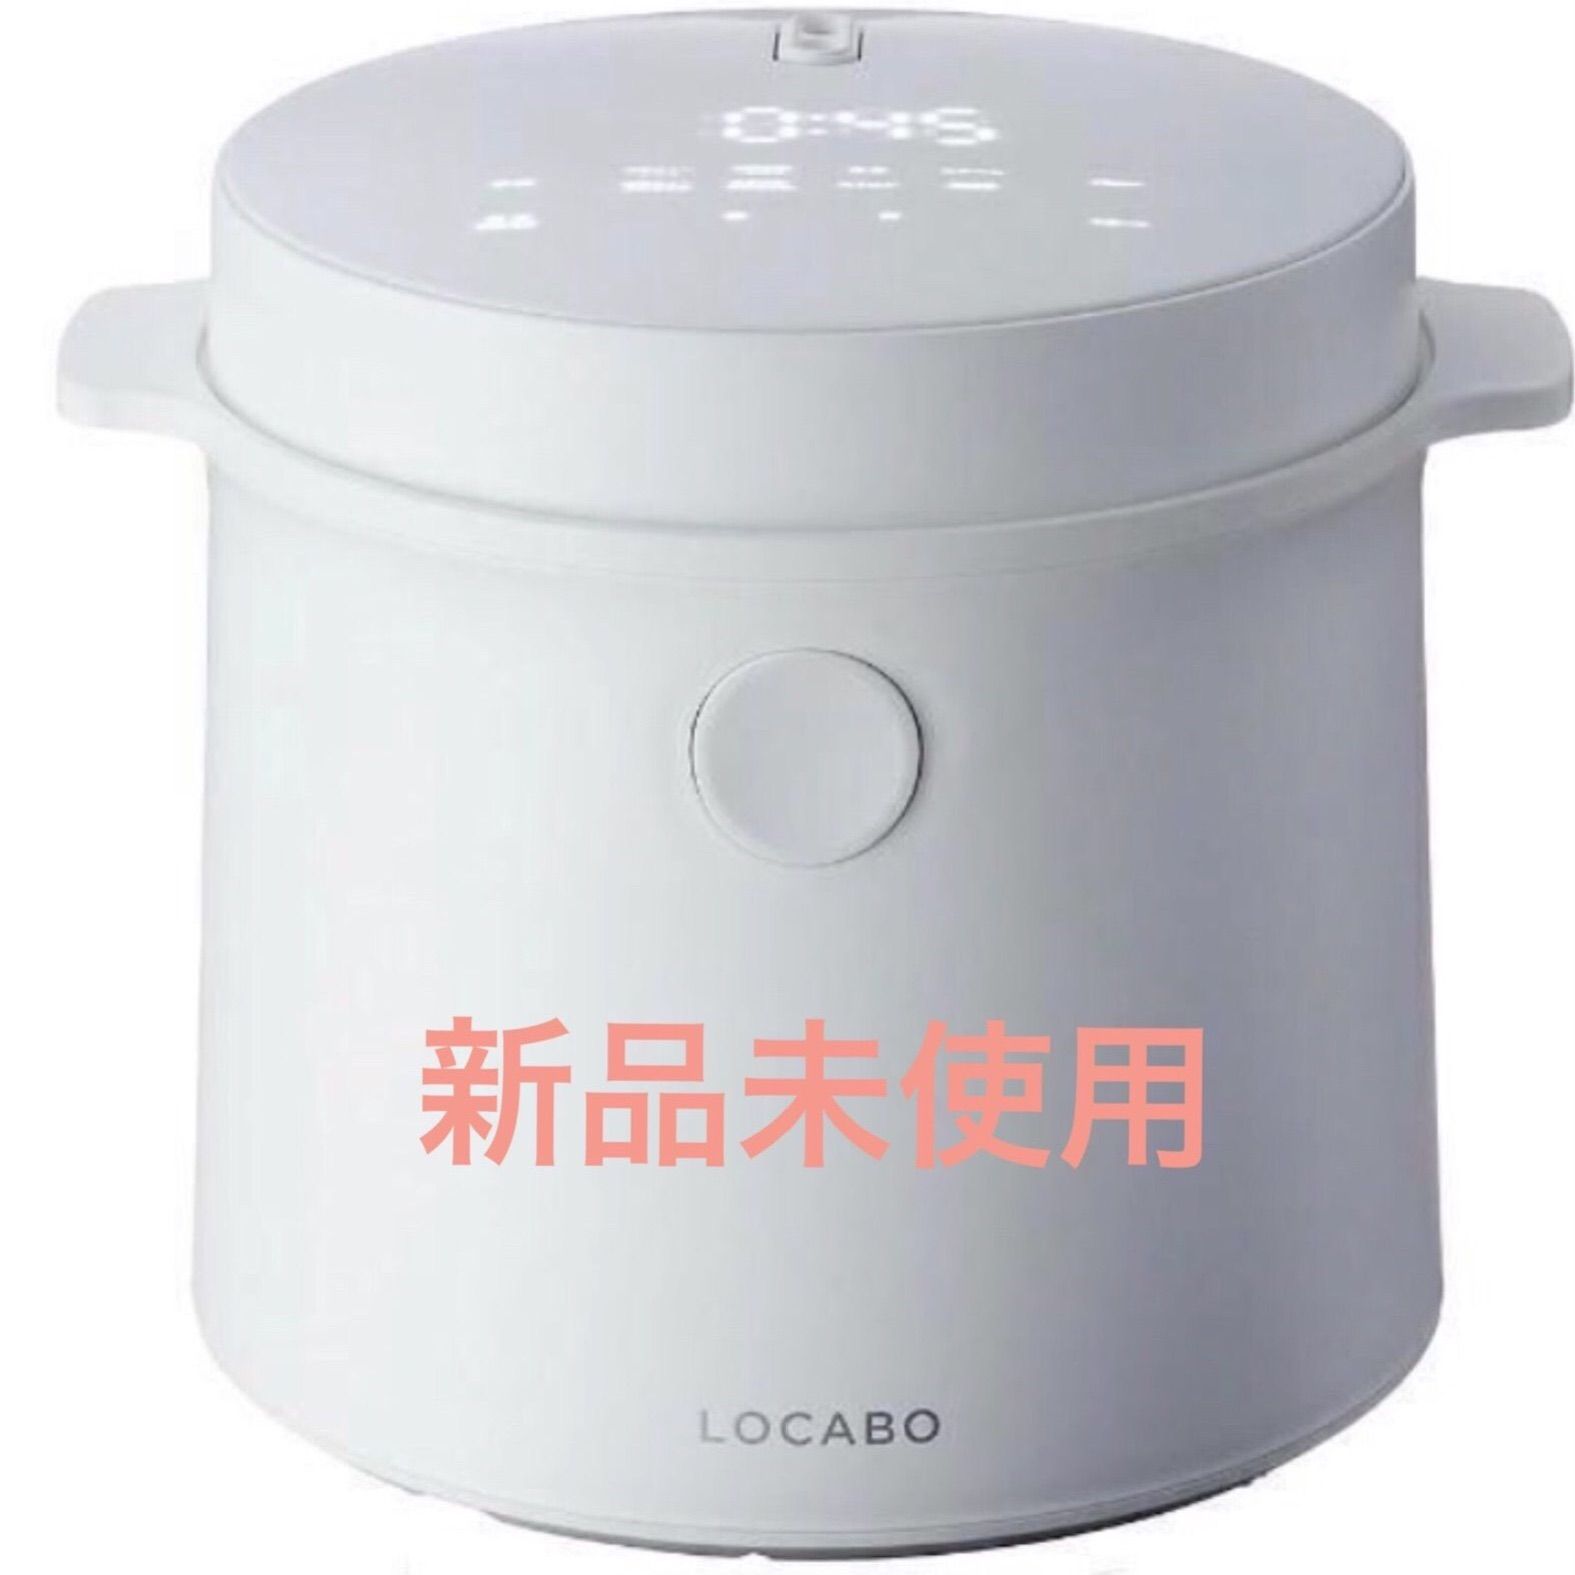 LOCABO ロカボ糖質カット炊飯器 ホワイト JM-C20E-W - 生活家電